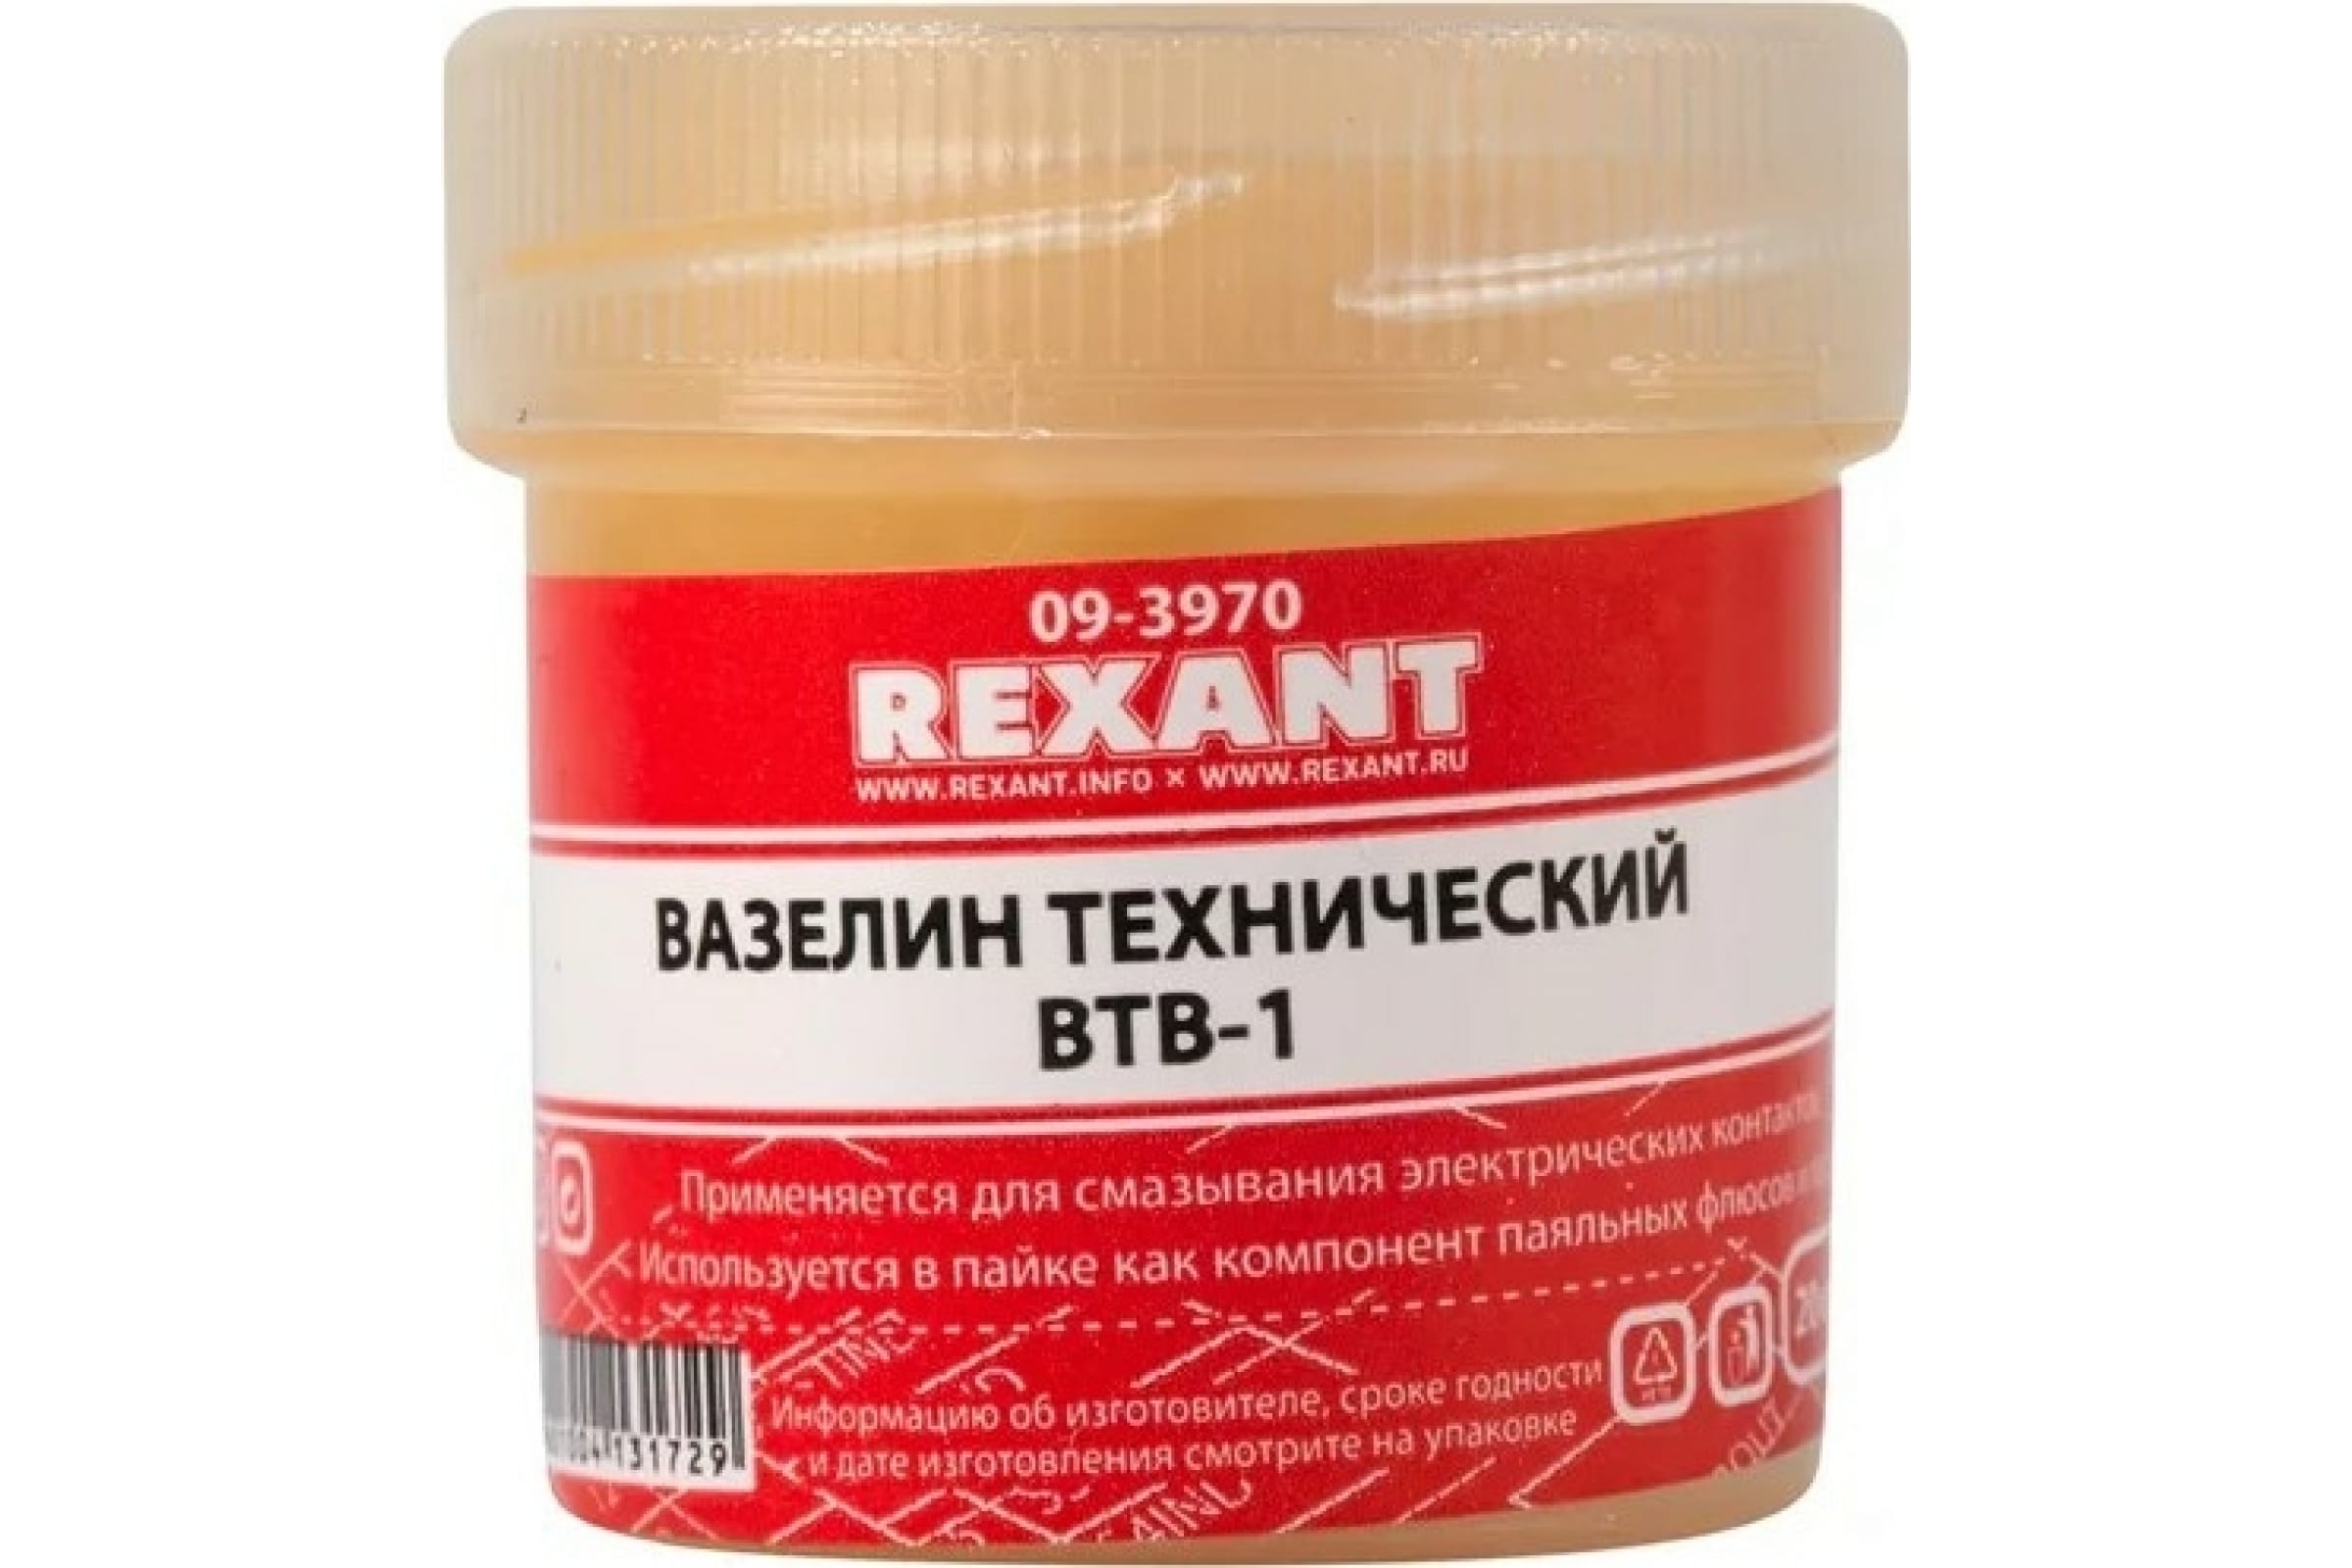 Вазелин технический Rexant 09-3970 ВТВ-1, 20 мл ,банка